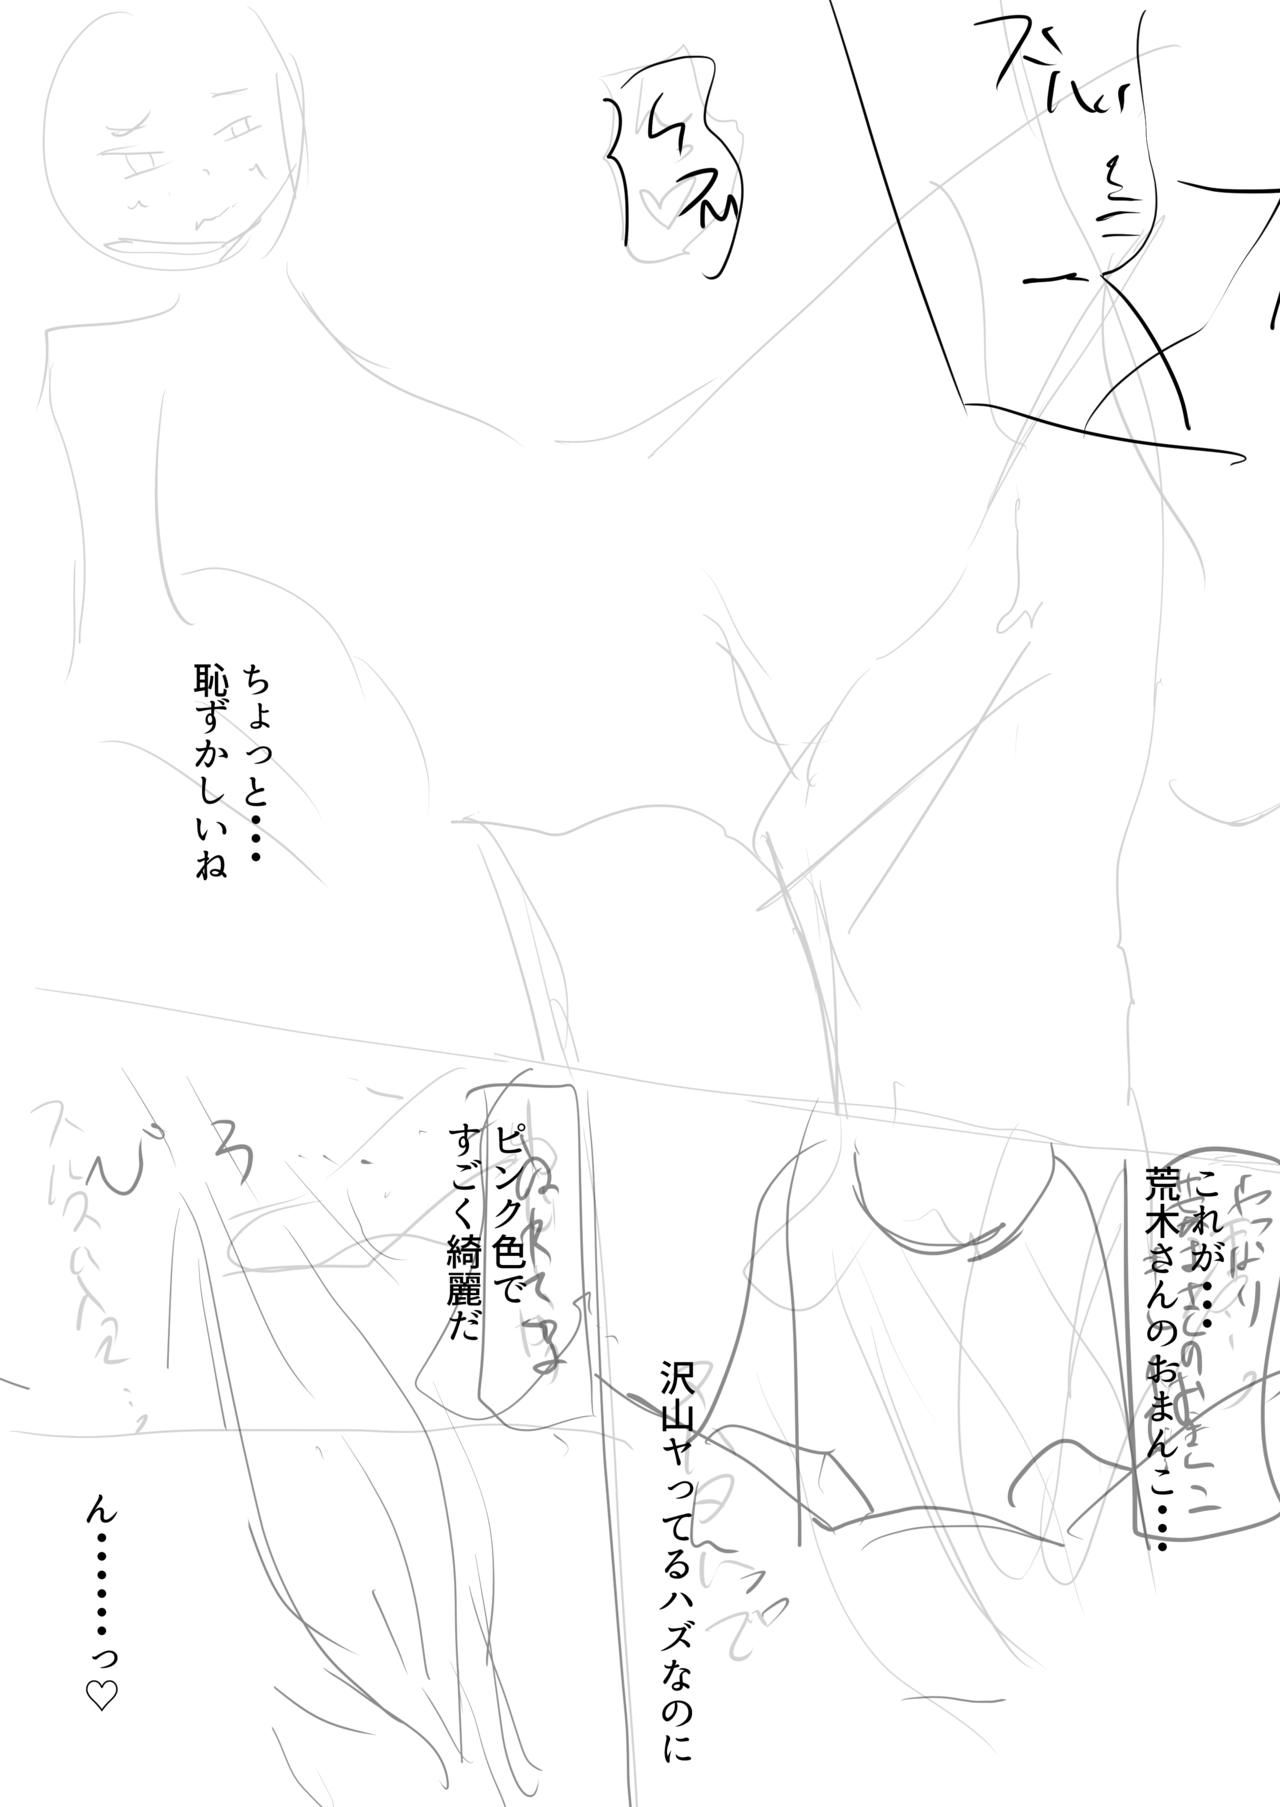 [Pixiv FANBOX] Takano Tomohiro (23606858) [Pixiv FANBOX] 高野友宏 (23606858) 745